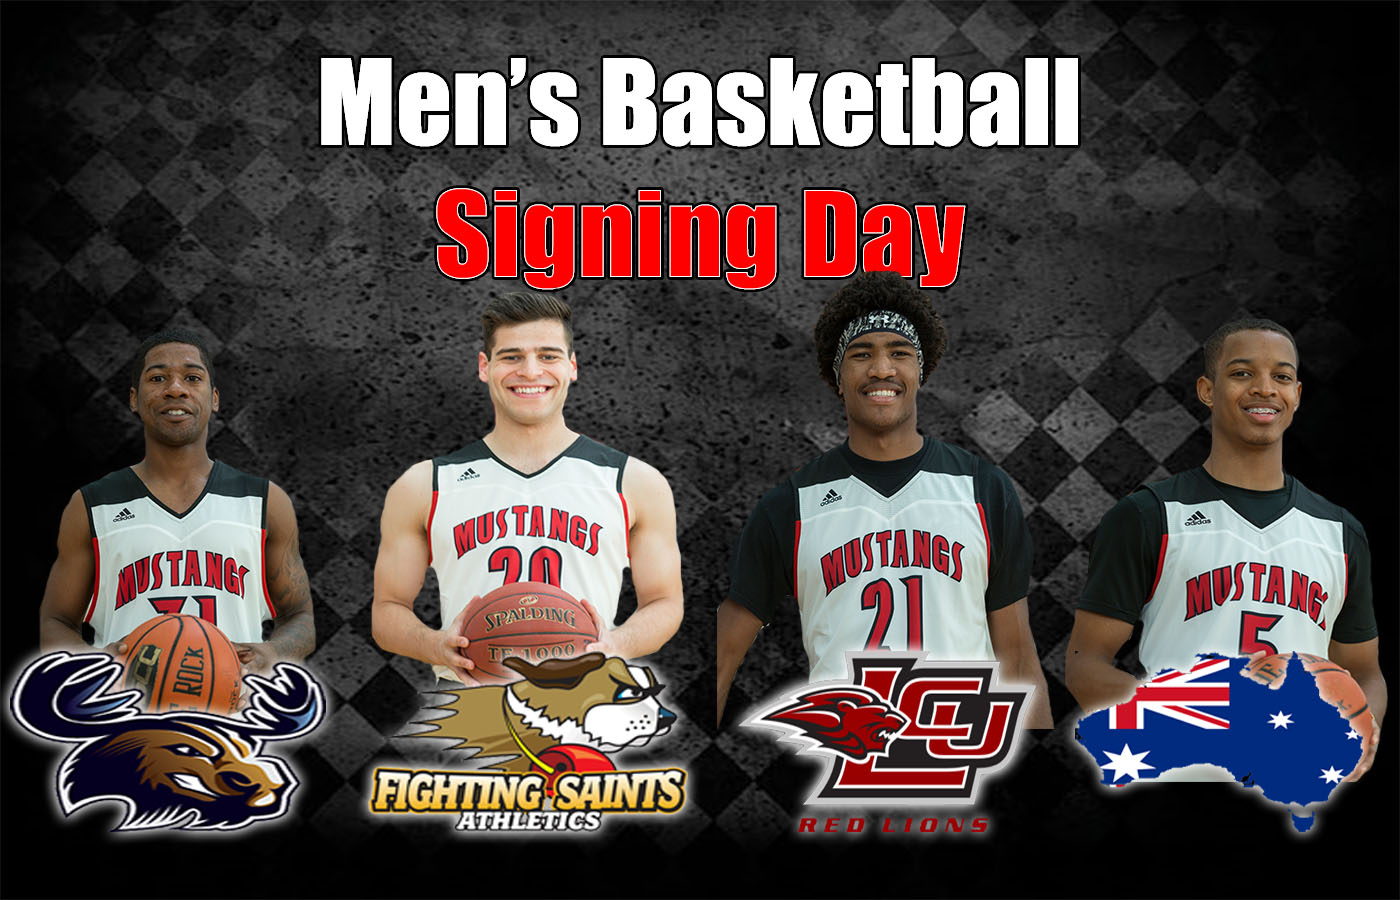 Men's Basketball Signing Day